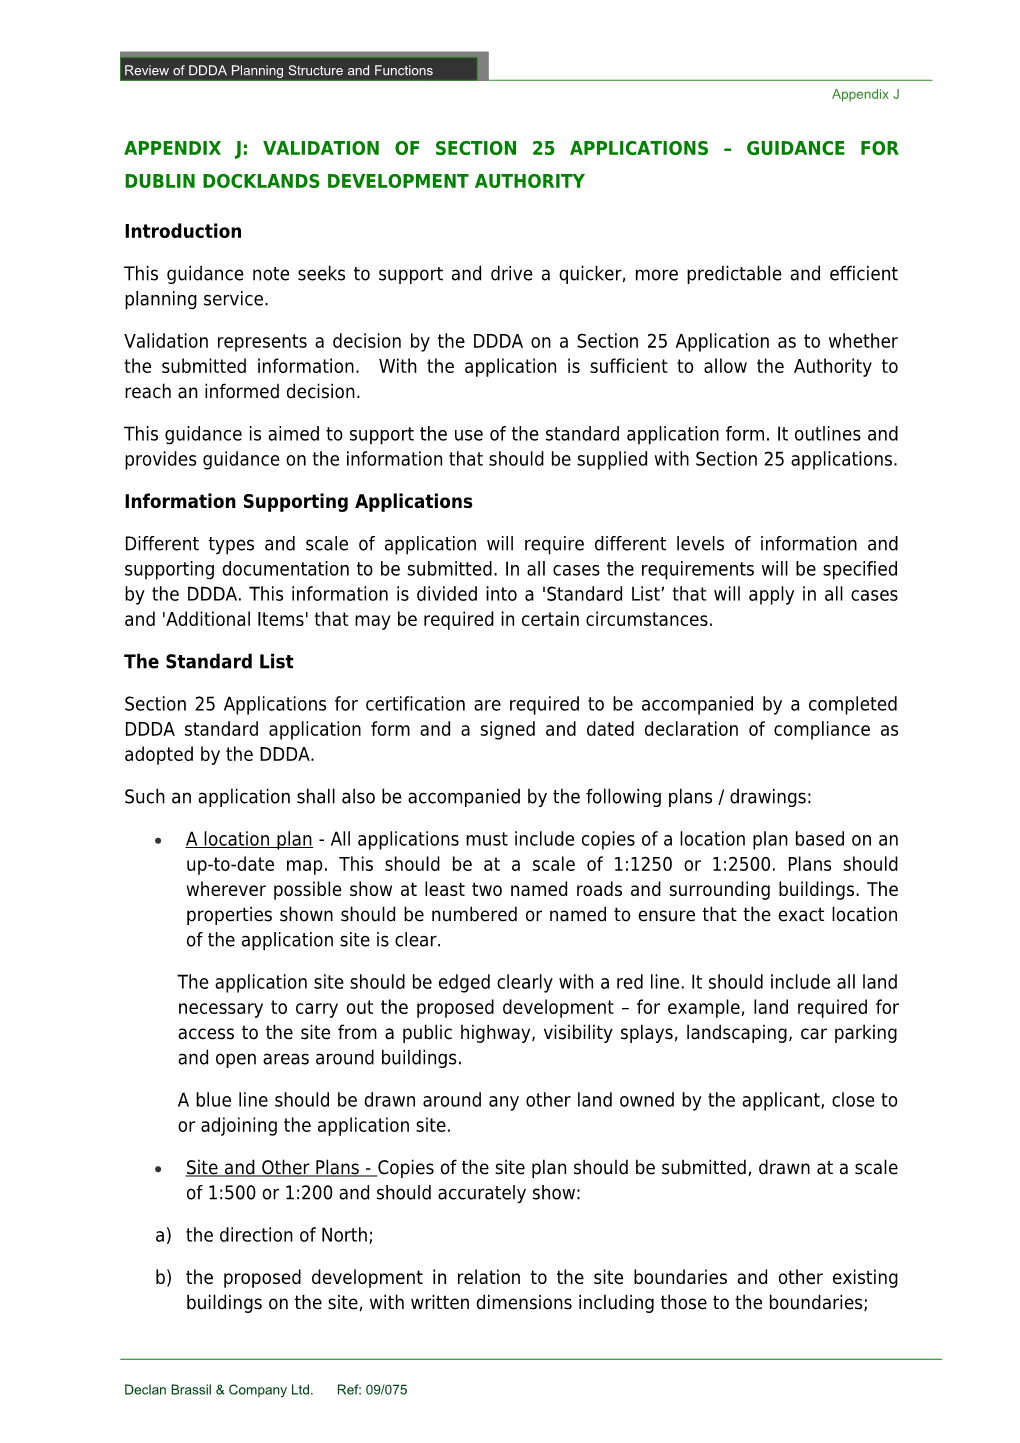 Appendix J: Validation of Section 25 Applications Guidance for Dublin Docklands Development